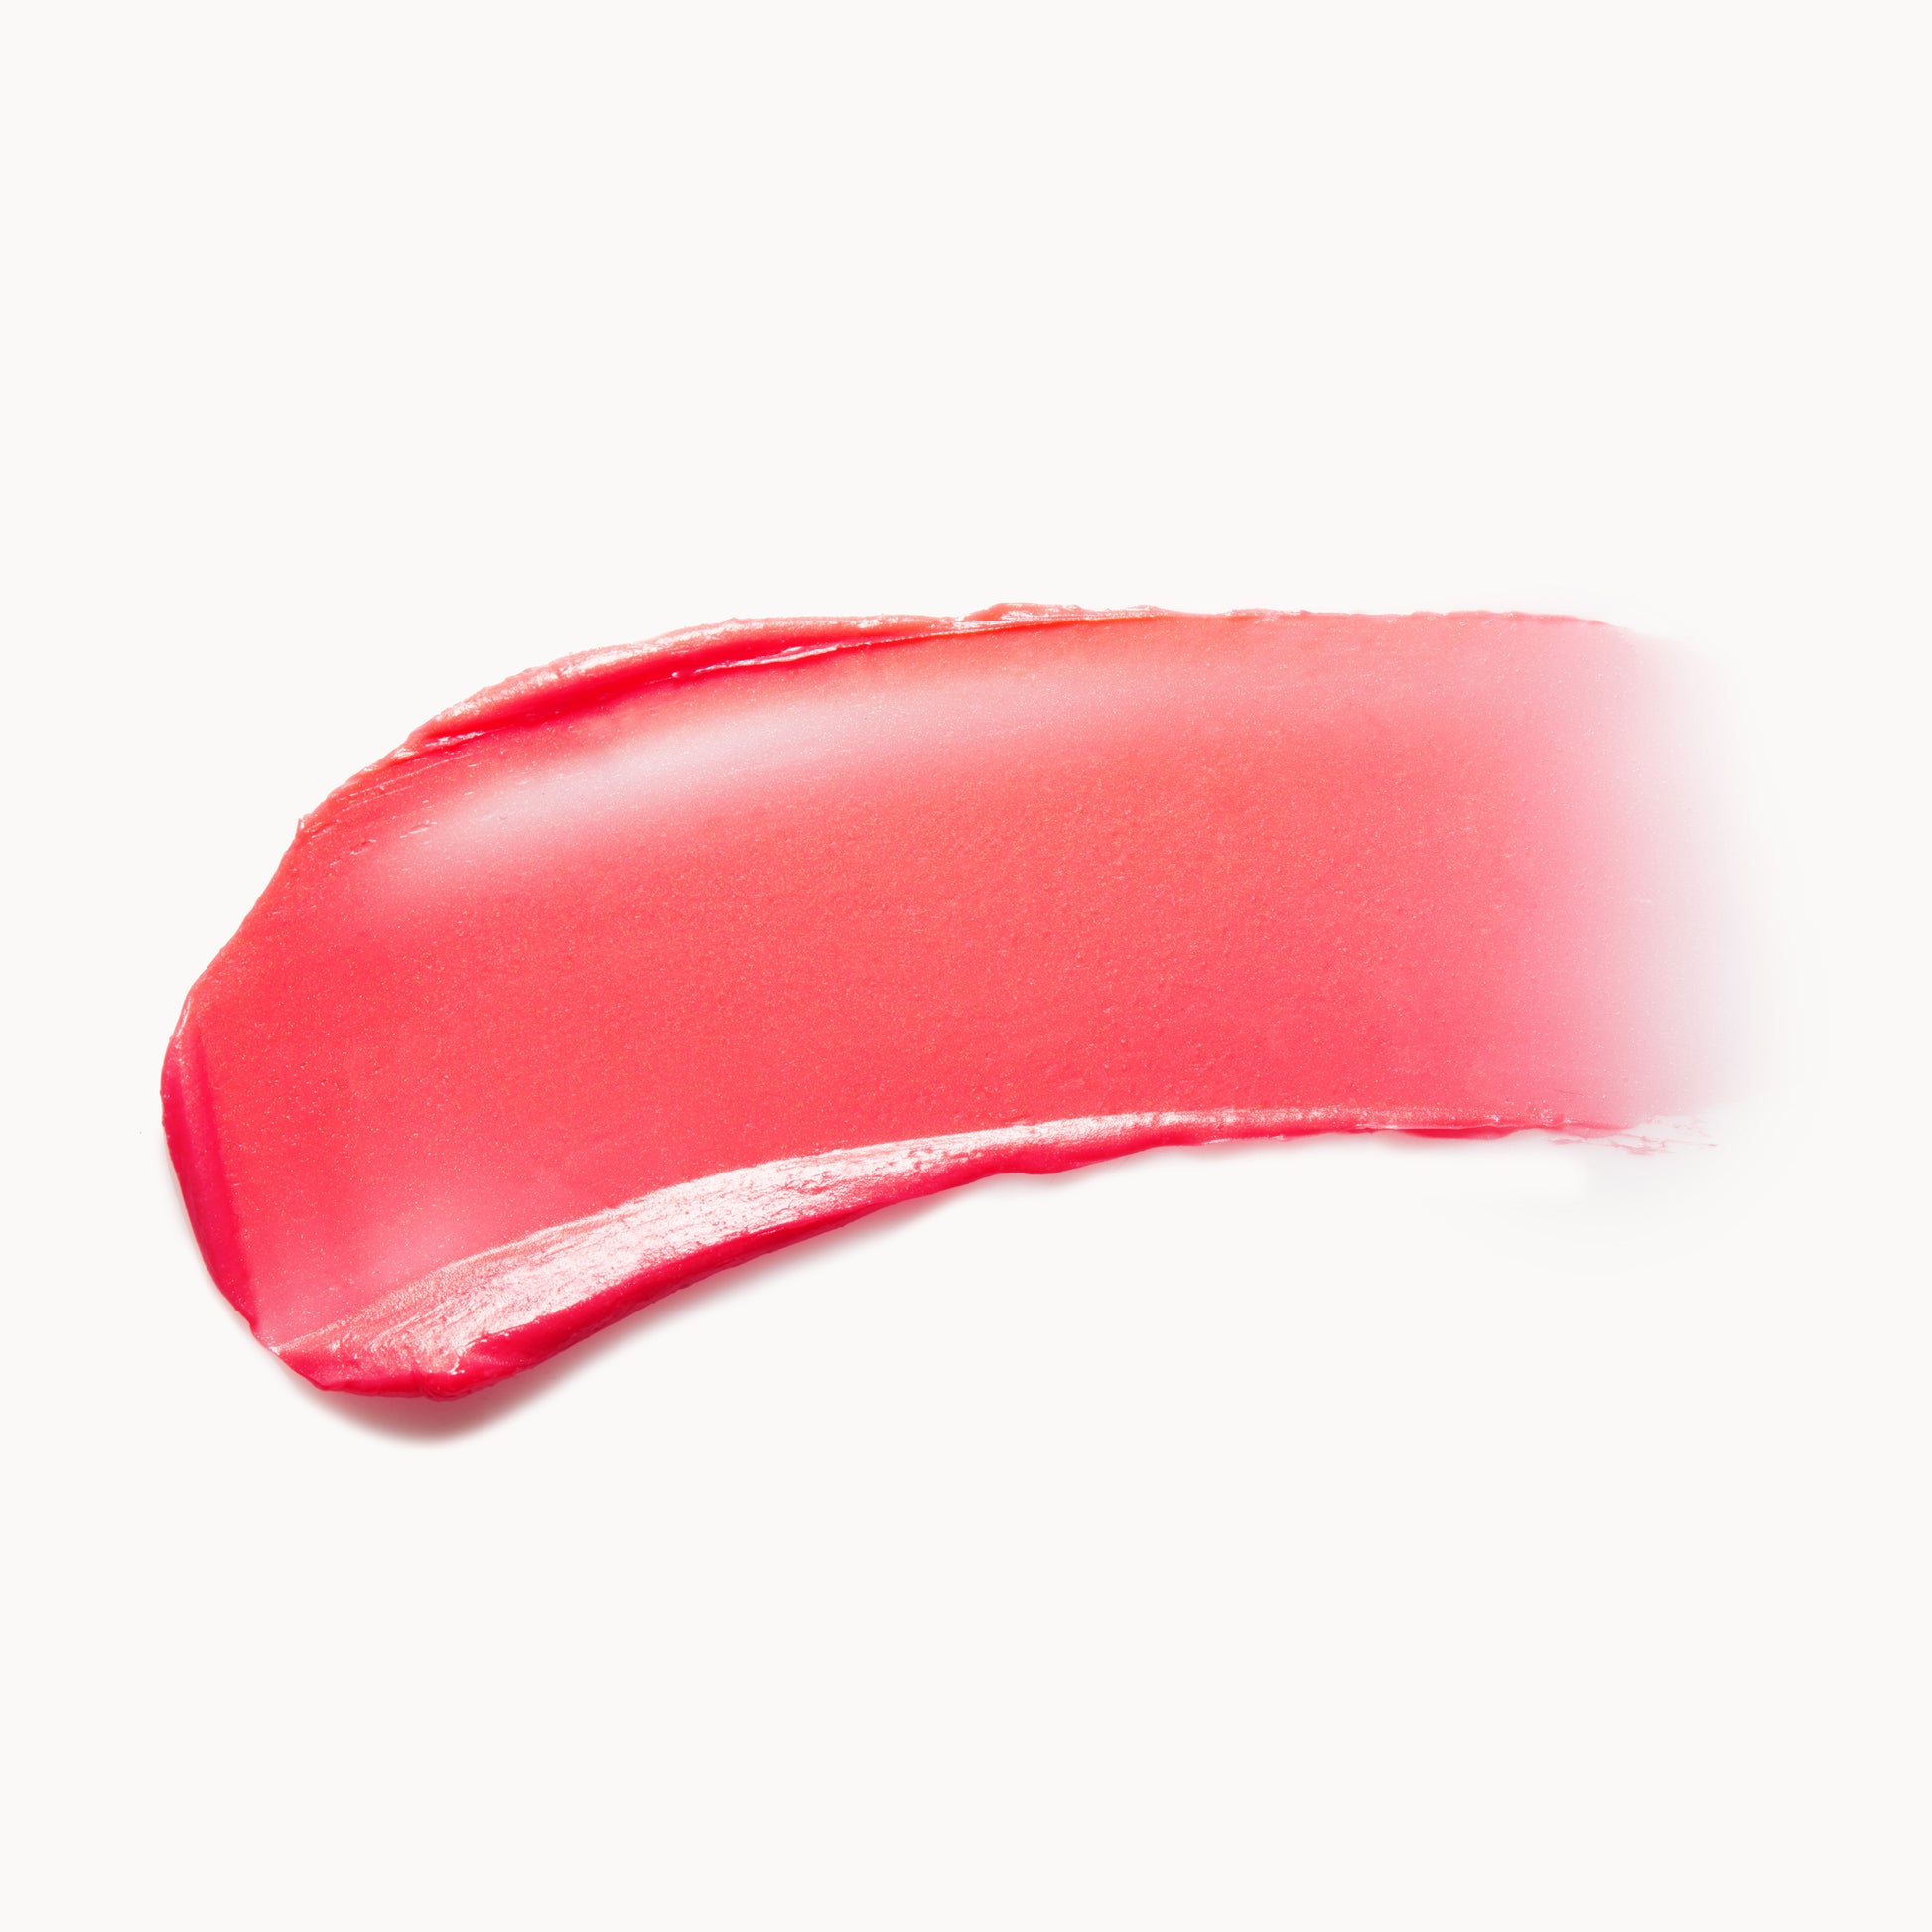 Kjaer Weis Tinted Lip Balm Refill Clear